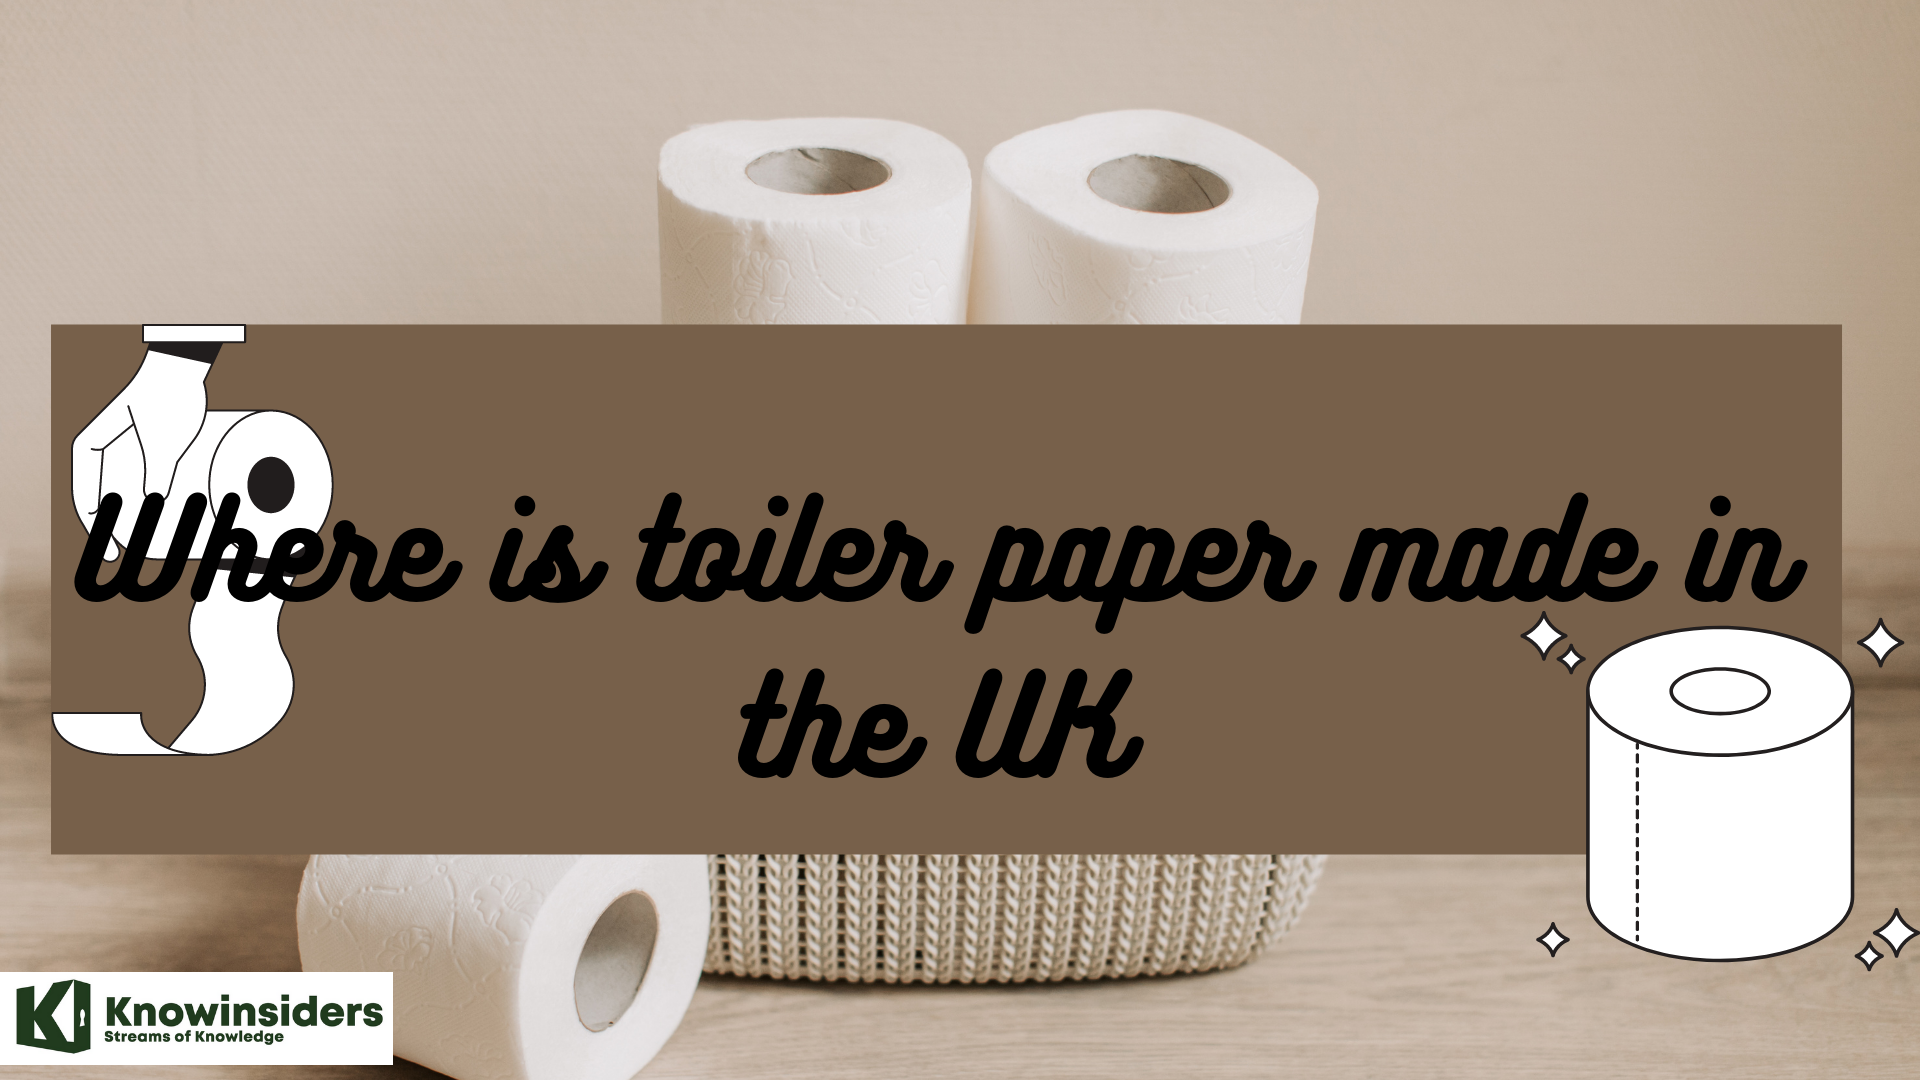 Top 10 Most Popular Toilet Paper Brands in the UK